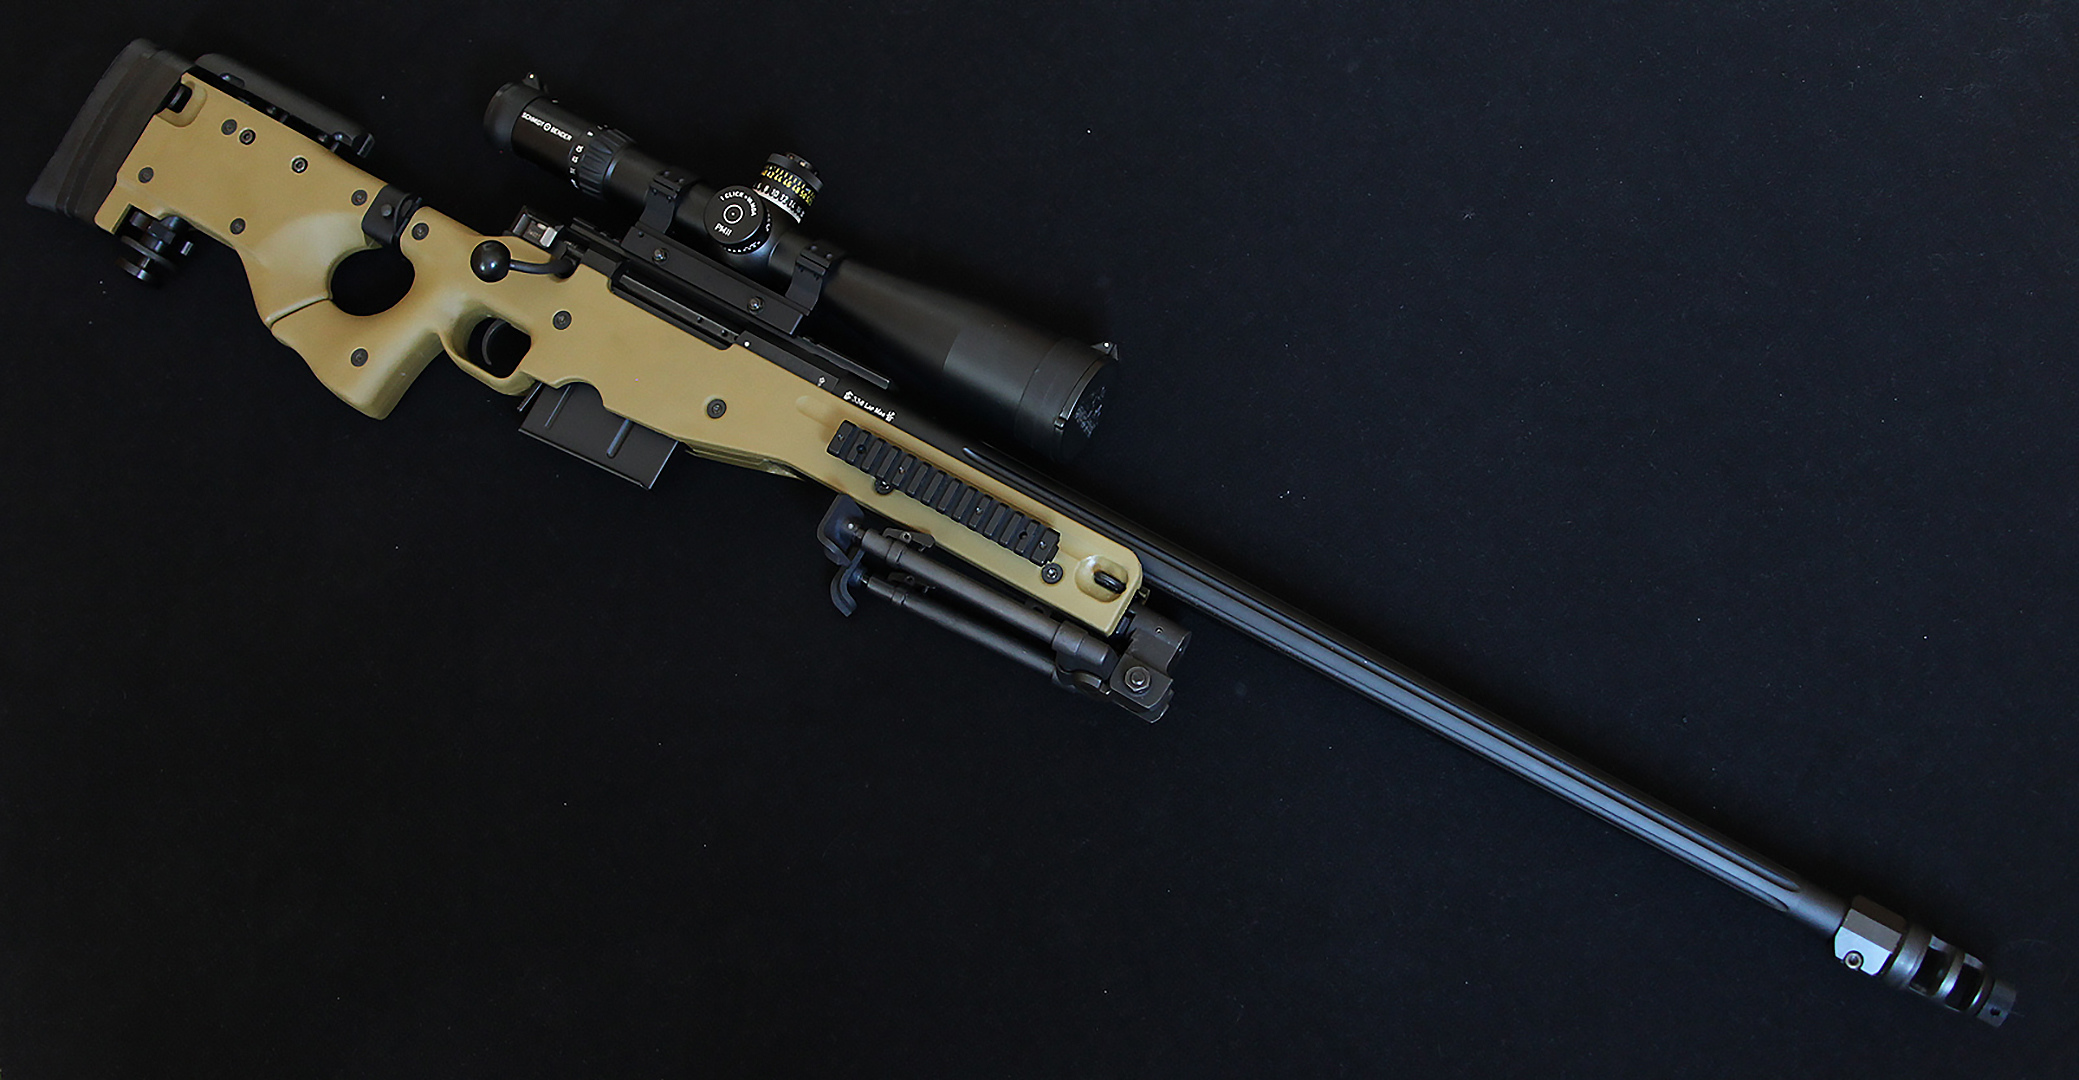 Awp снайперская винтовка википедия фото 83